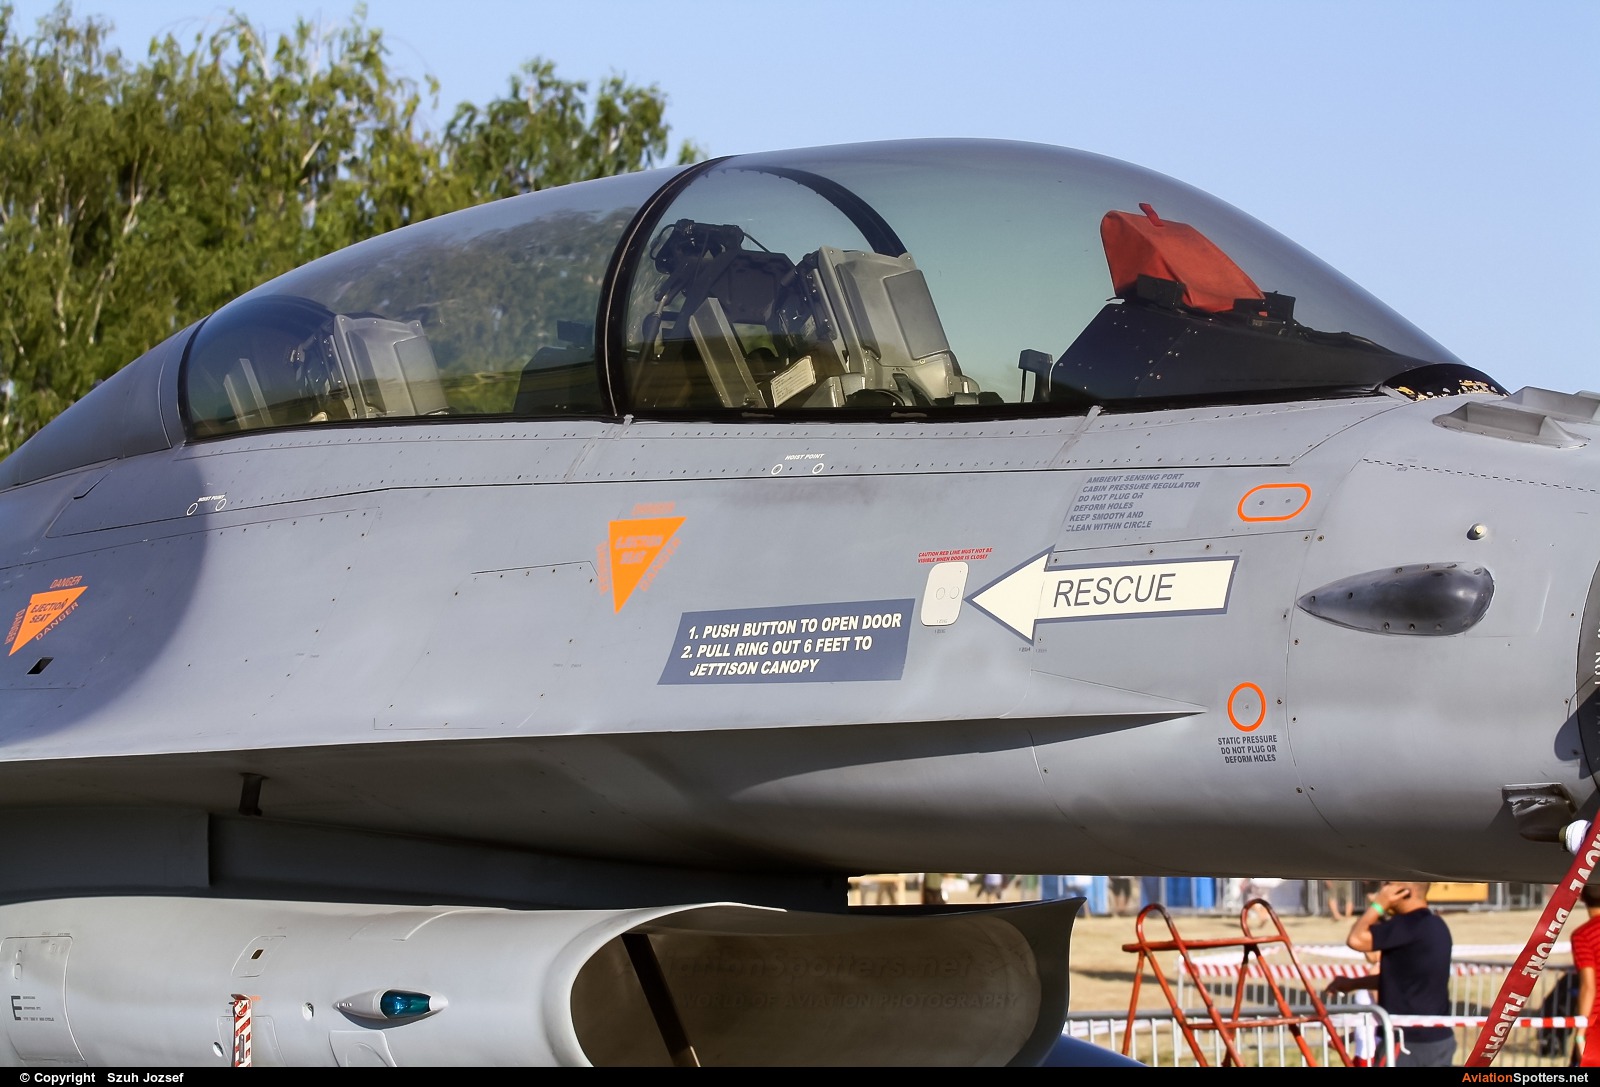 Belgium - Air Force  -  F-16AM Fighting Falcon  (FB-17) By Szuh Jozsef (szuh jozsef)